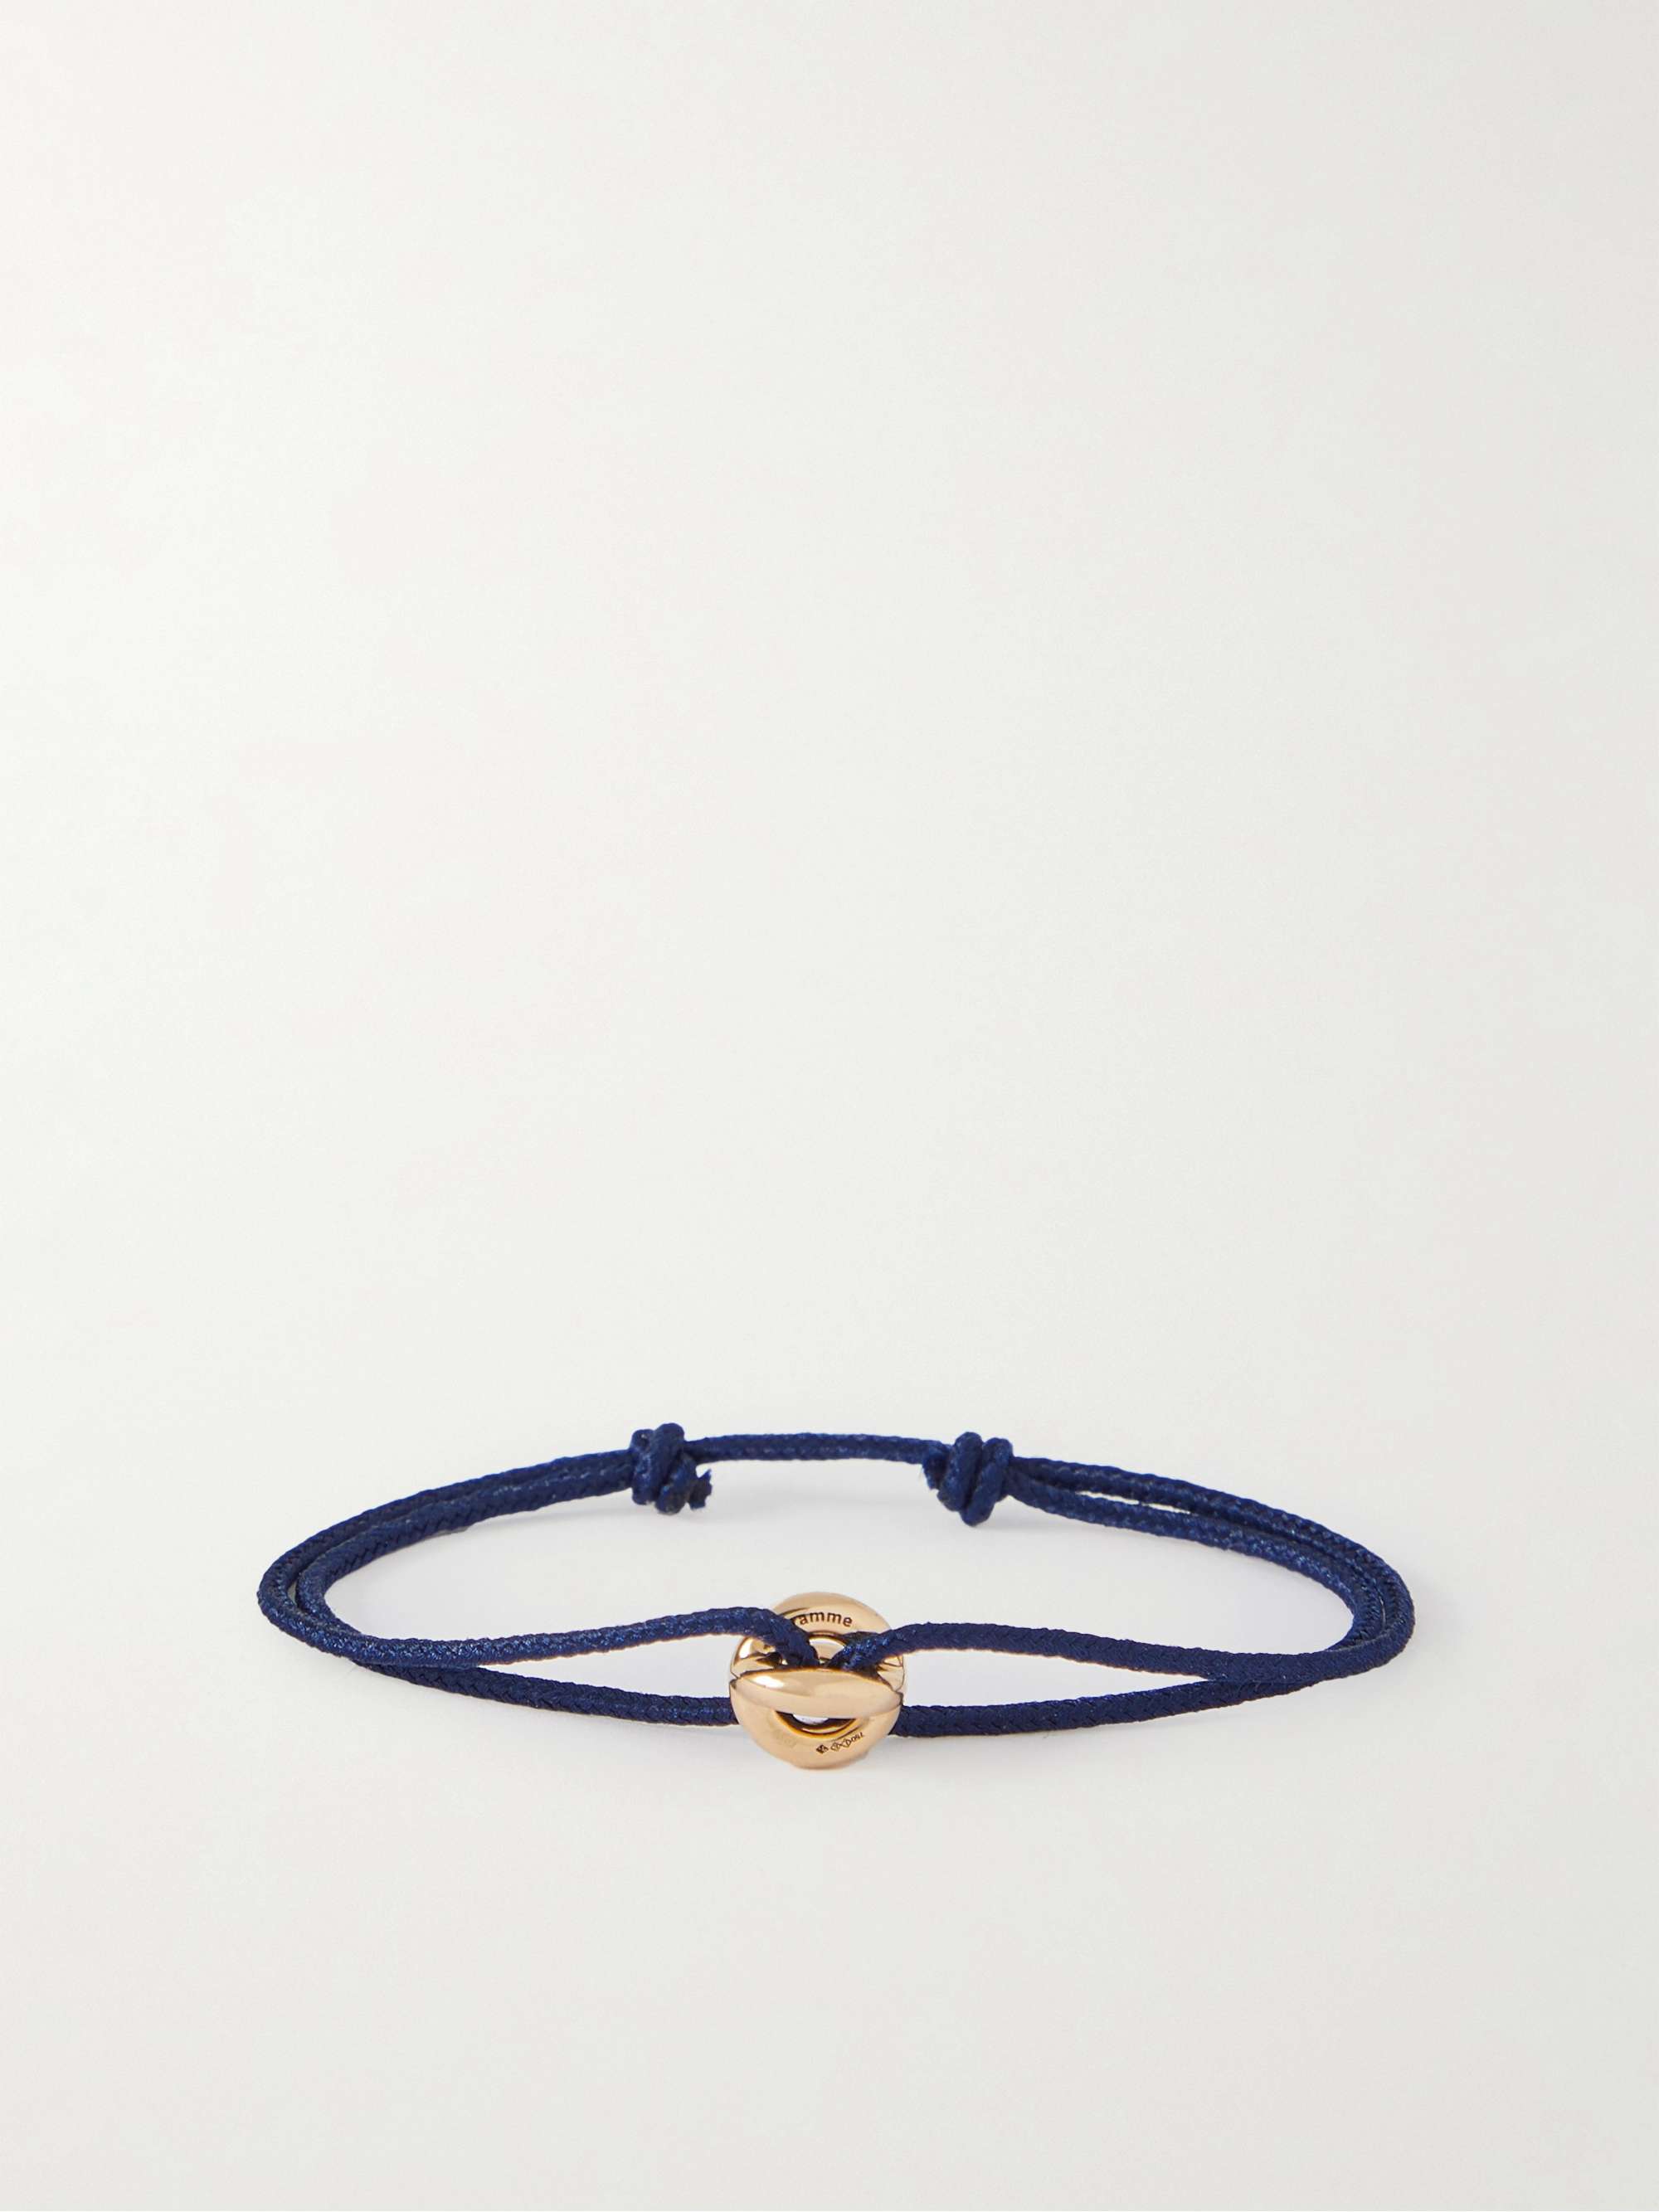 I Taggin' Love Ya string necklace, personalized friendship necklace/bracelet  – BonBon Boutique